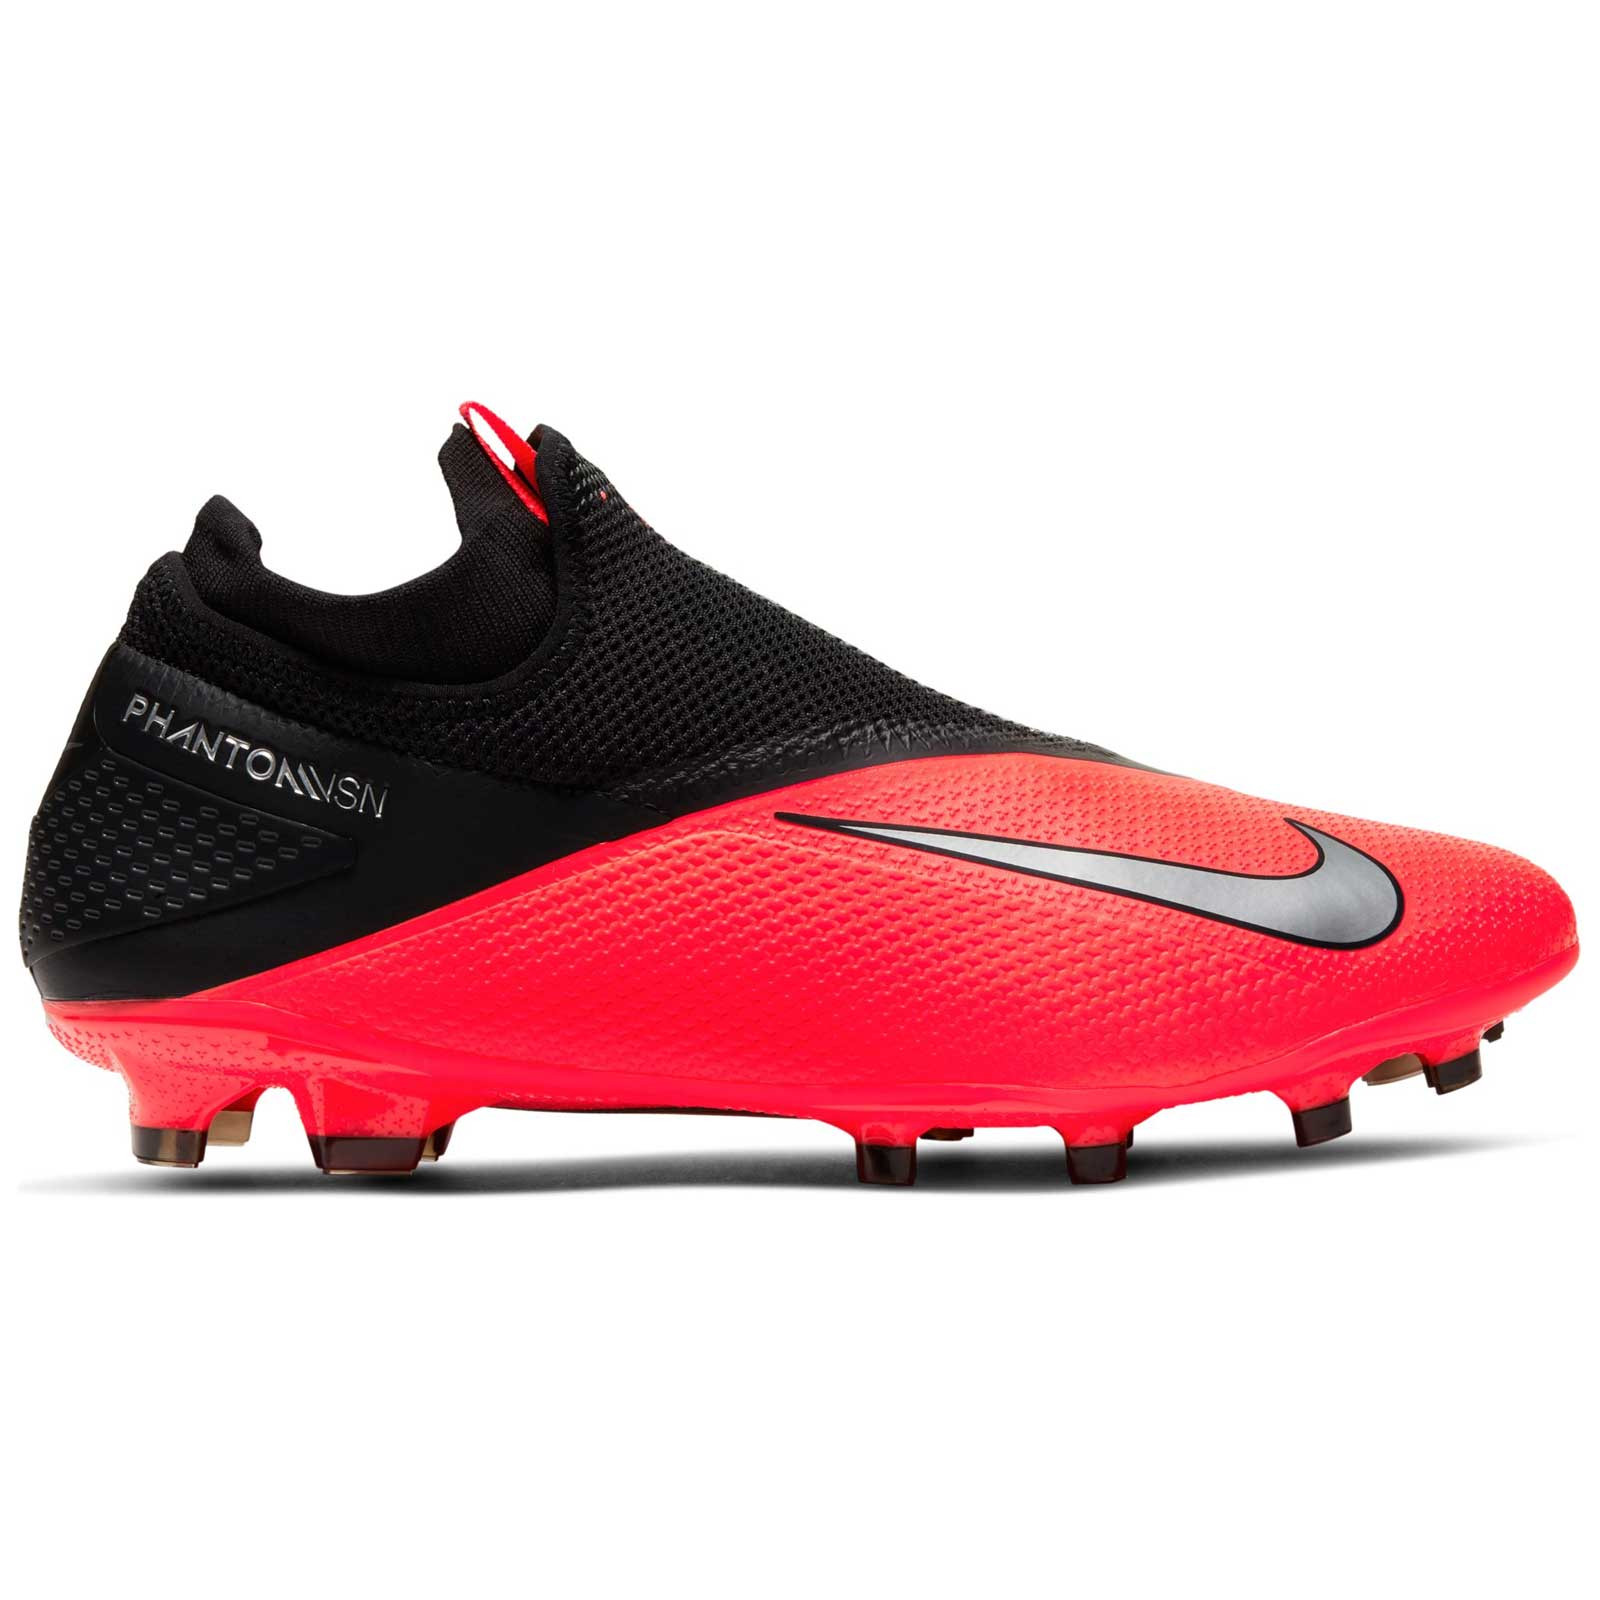 Agarrar superficie depositar Nike Phantom Vision 2 Pro DF FG rosa negro | futbolmania